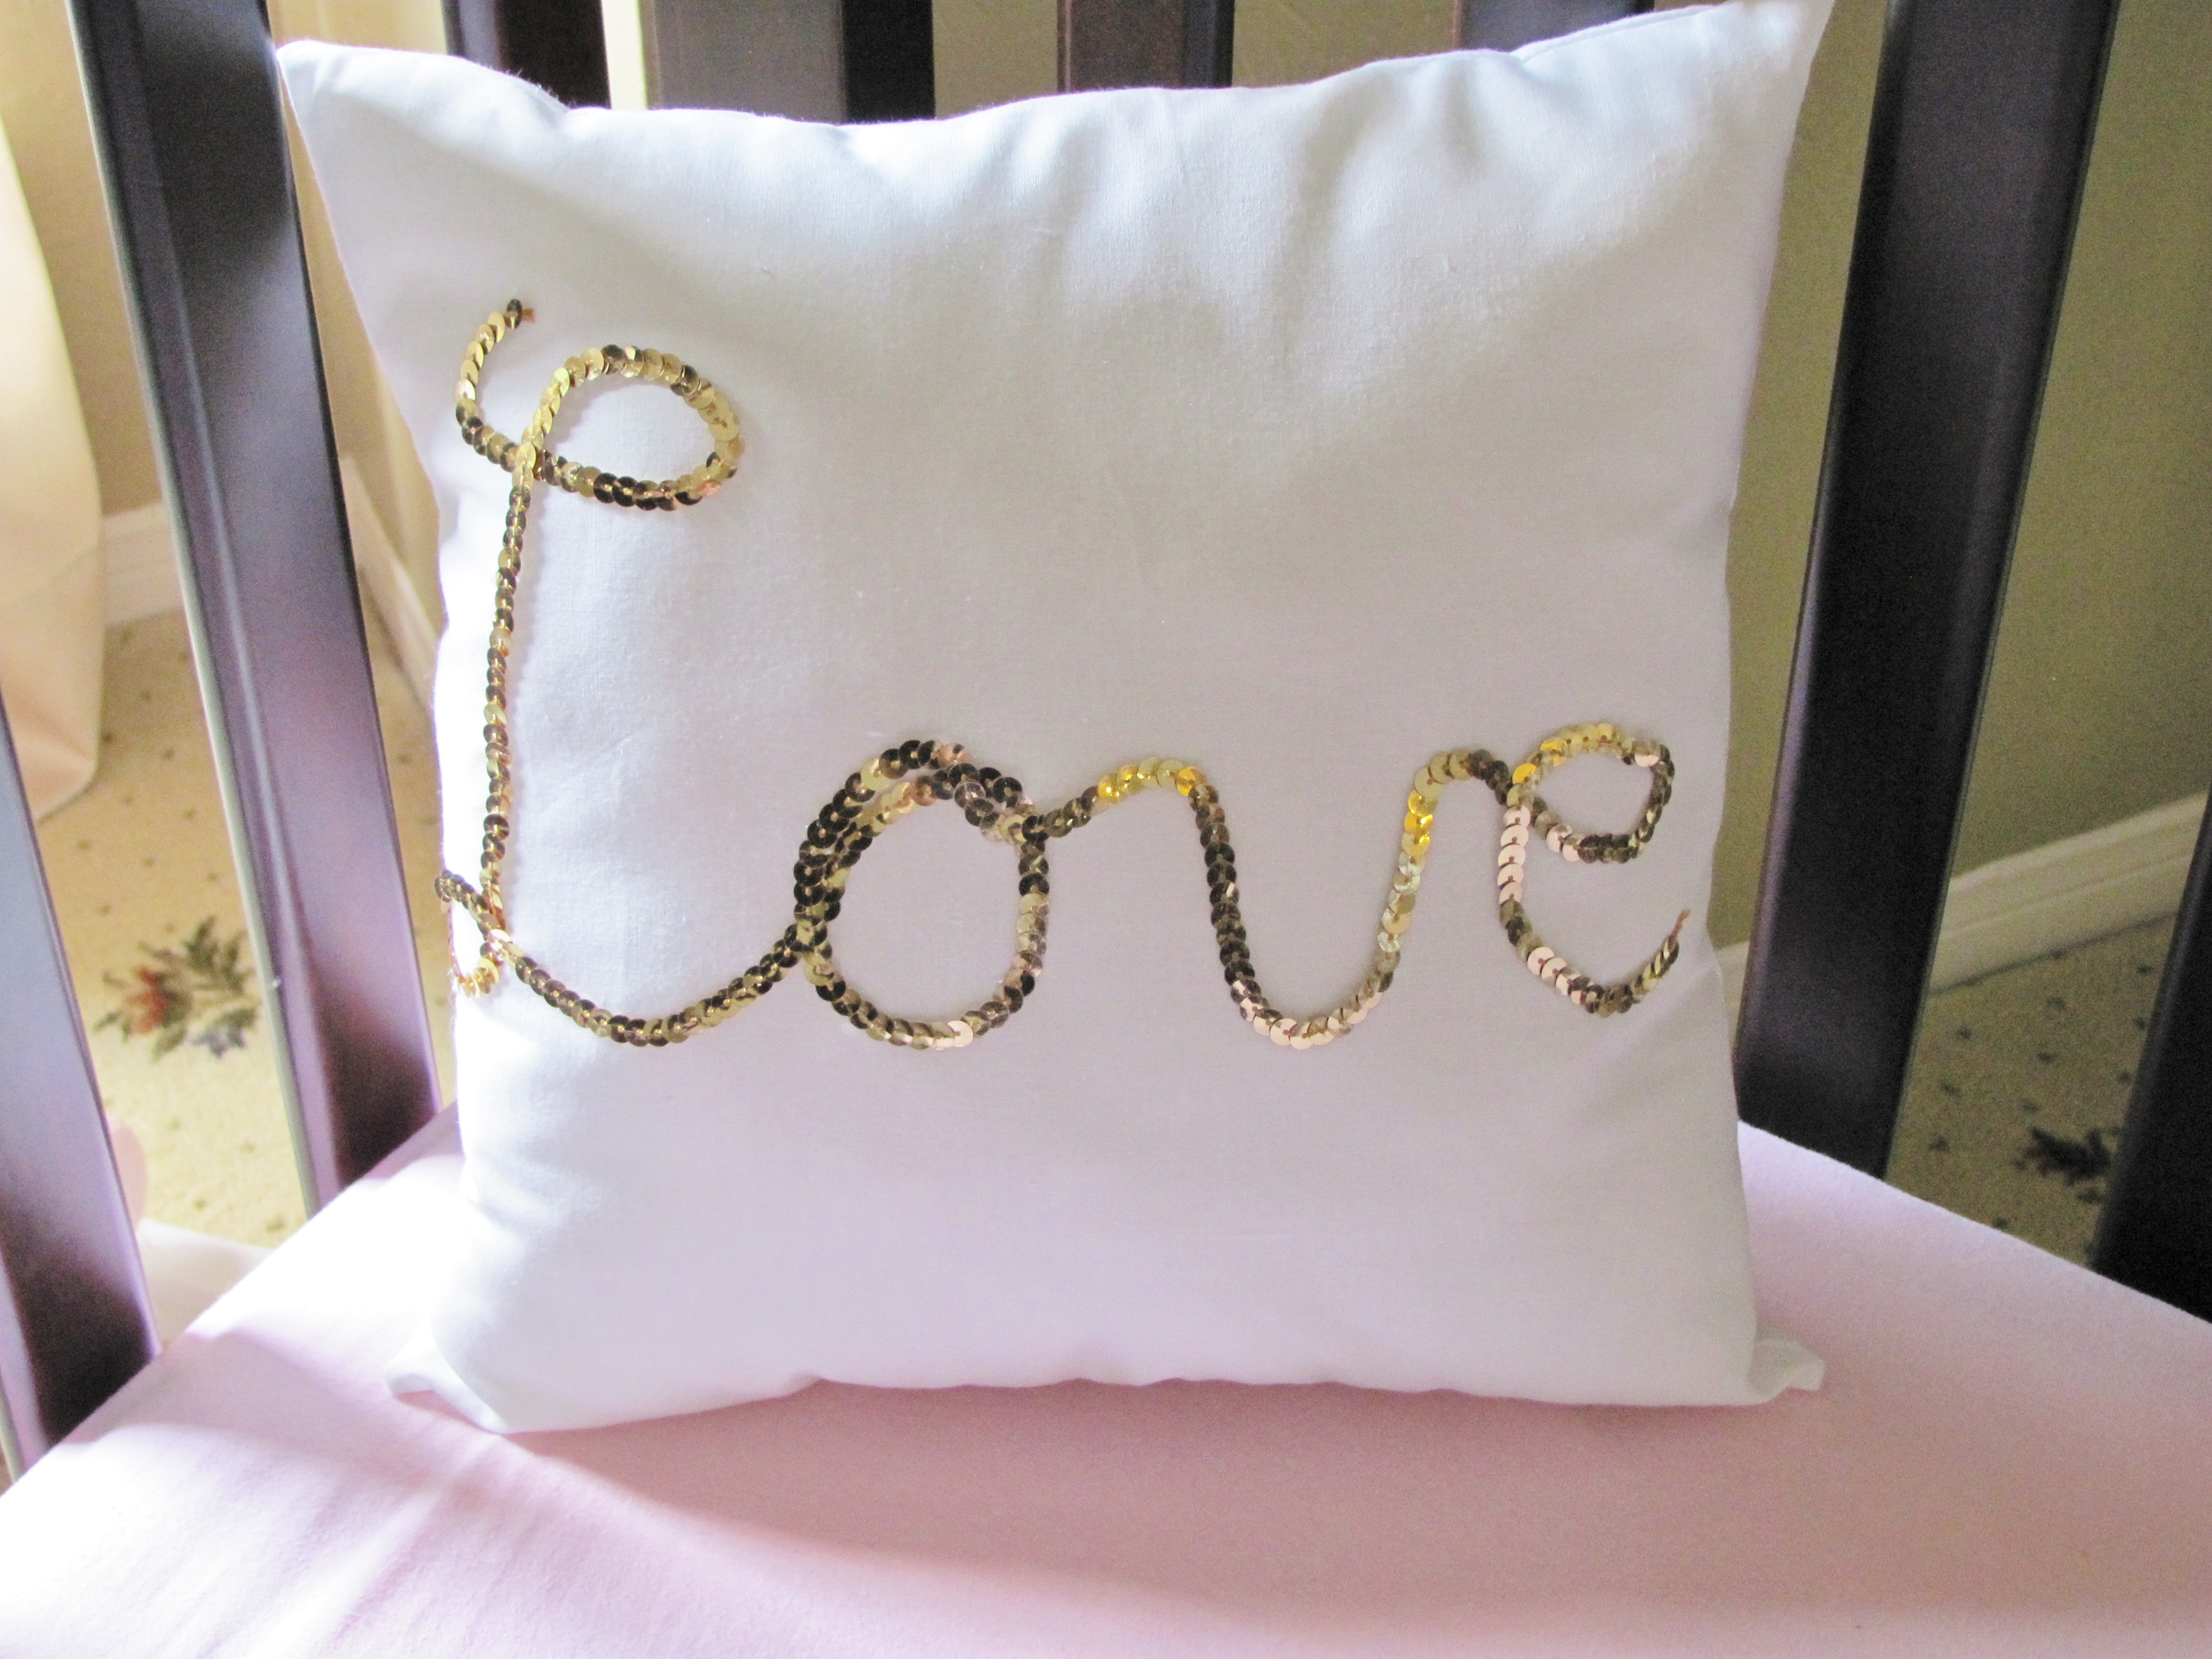 Sequin Script "Love" Pillow